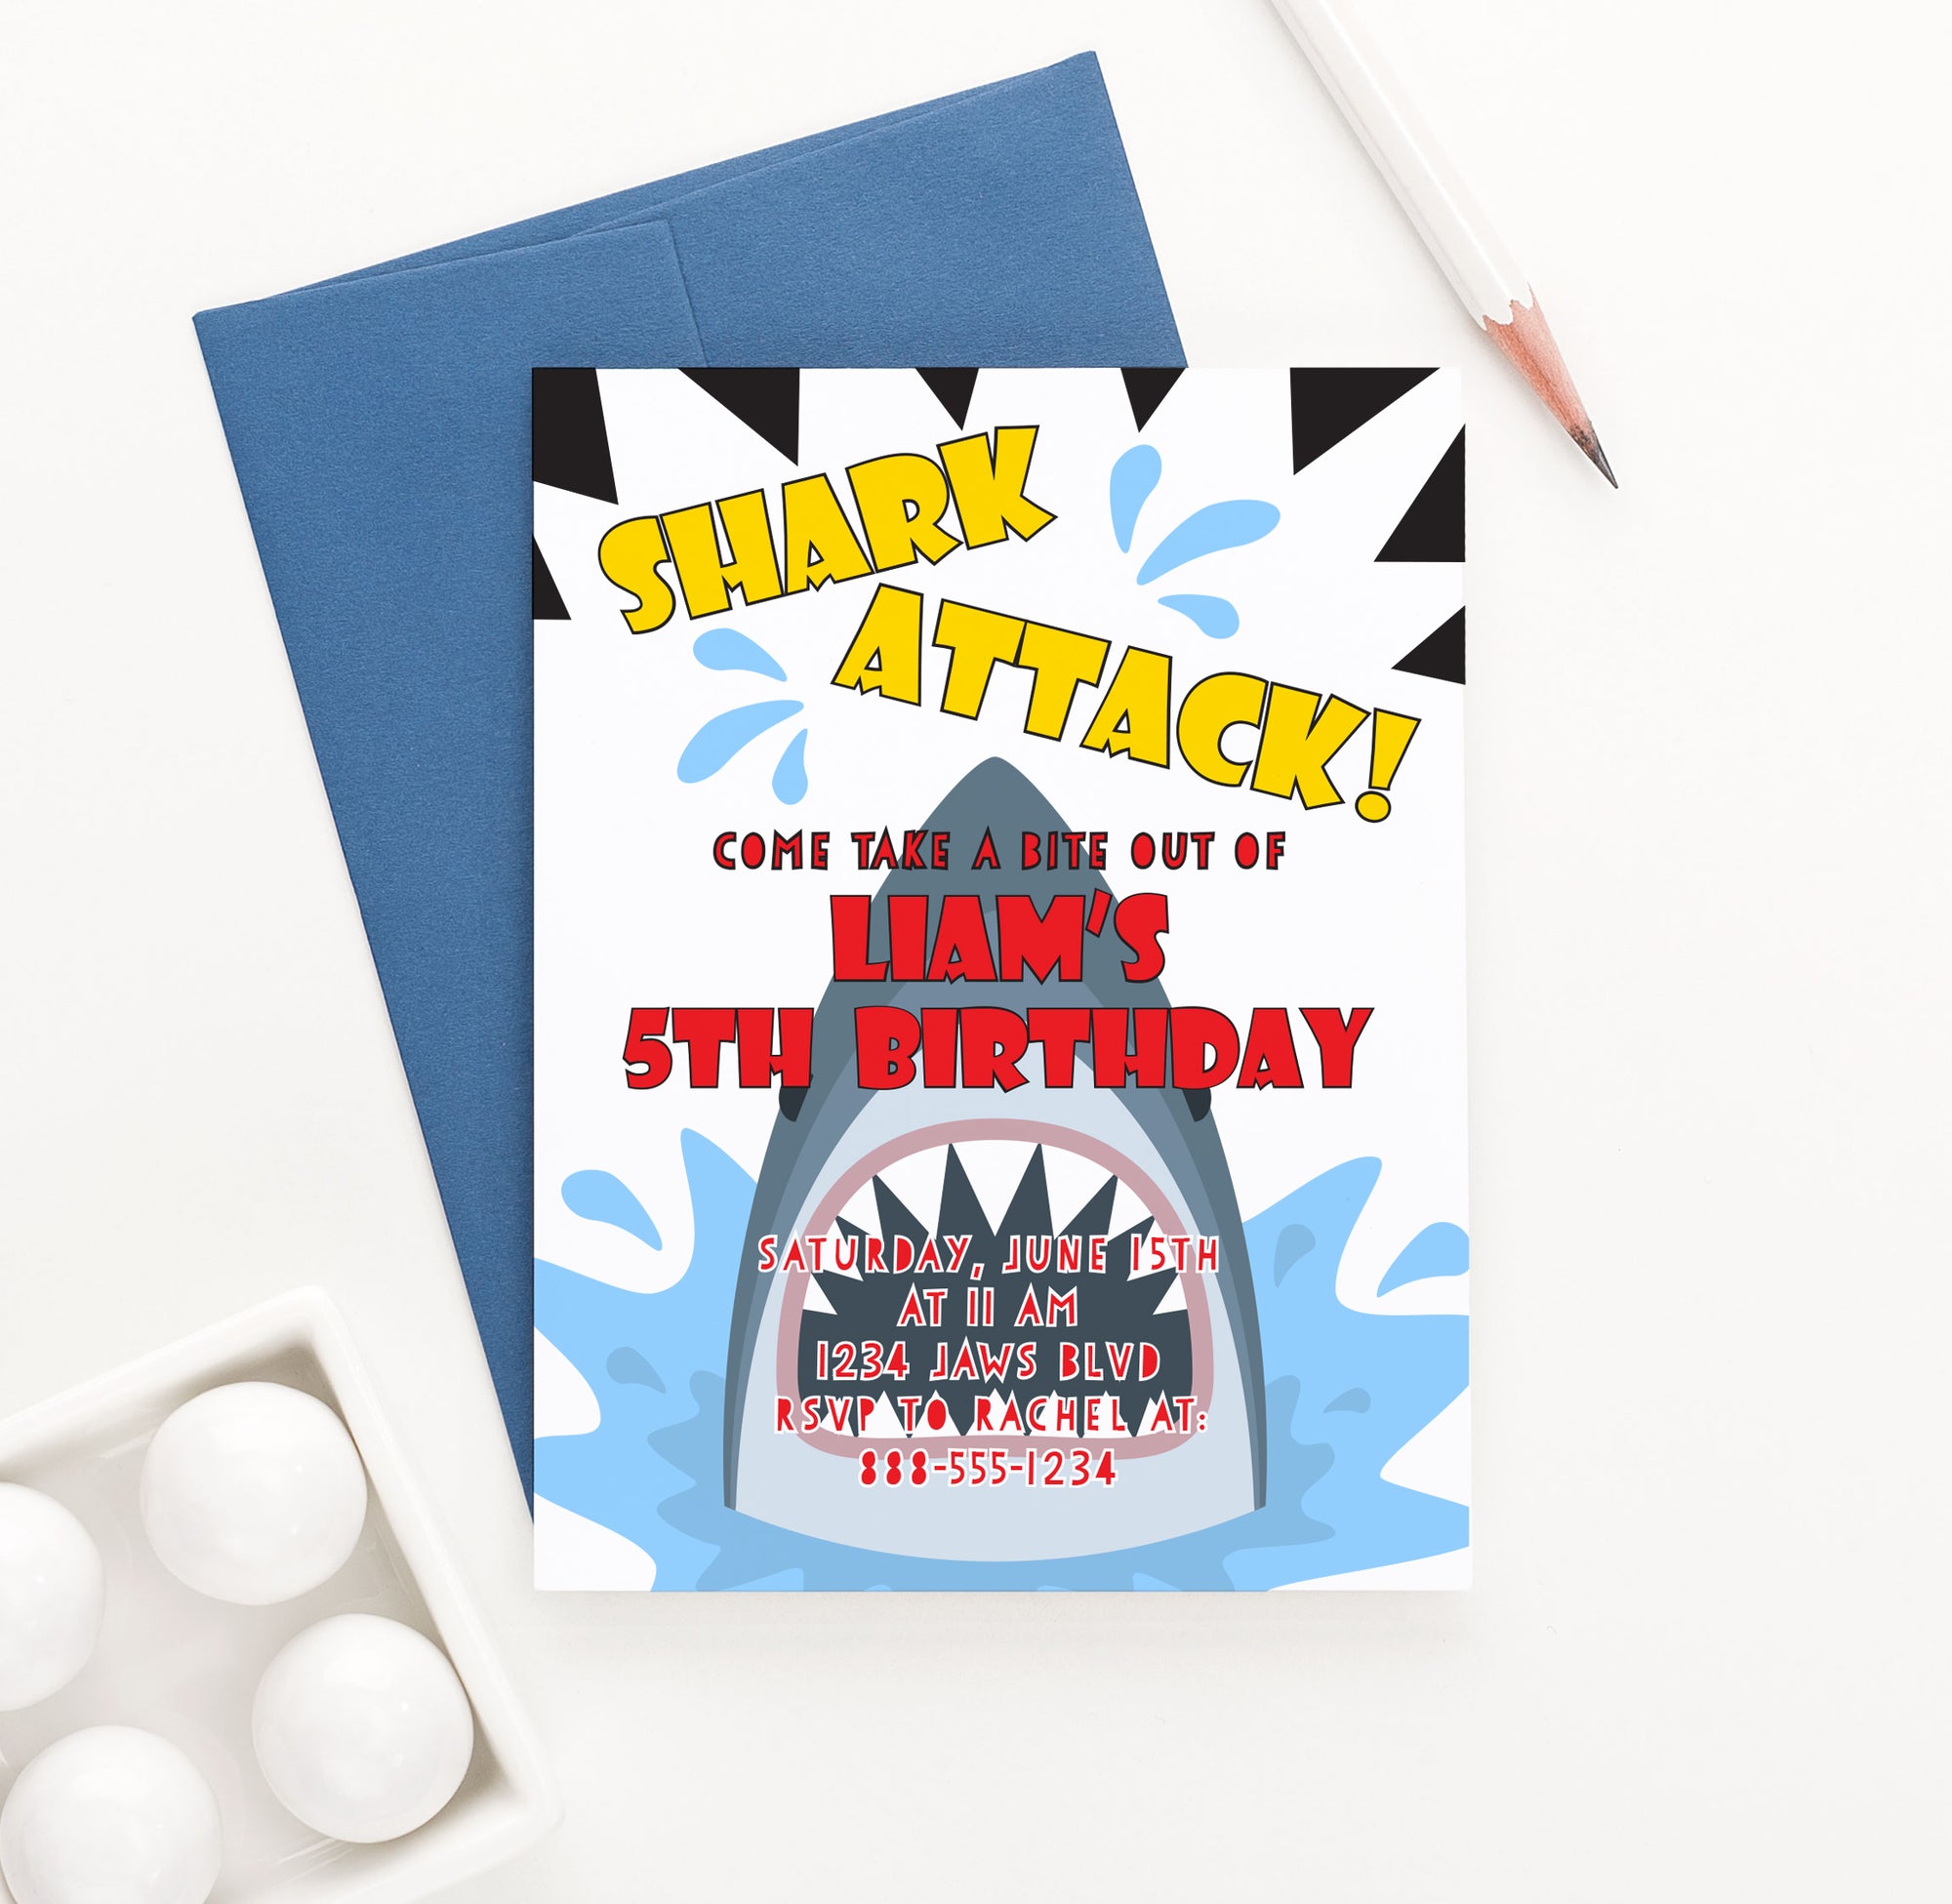 Personalized Shark Attack Birthday Invitations With Shark